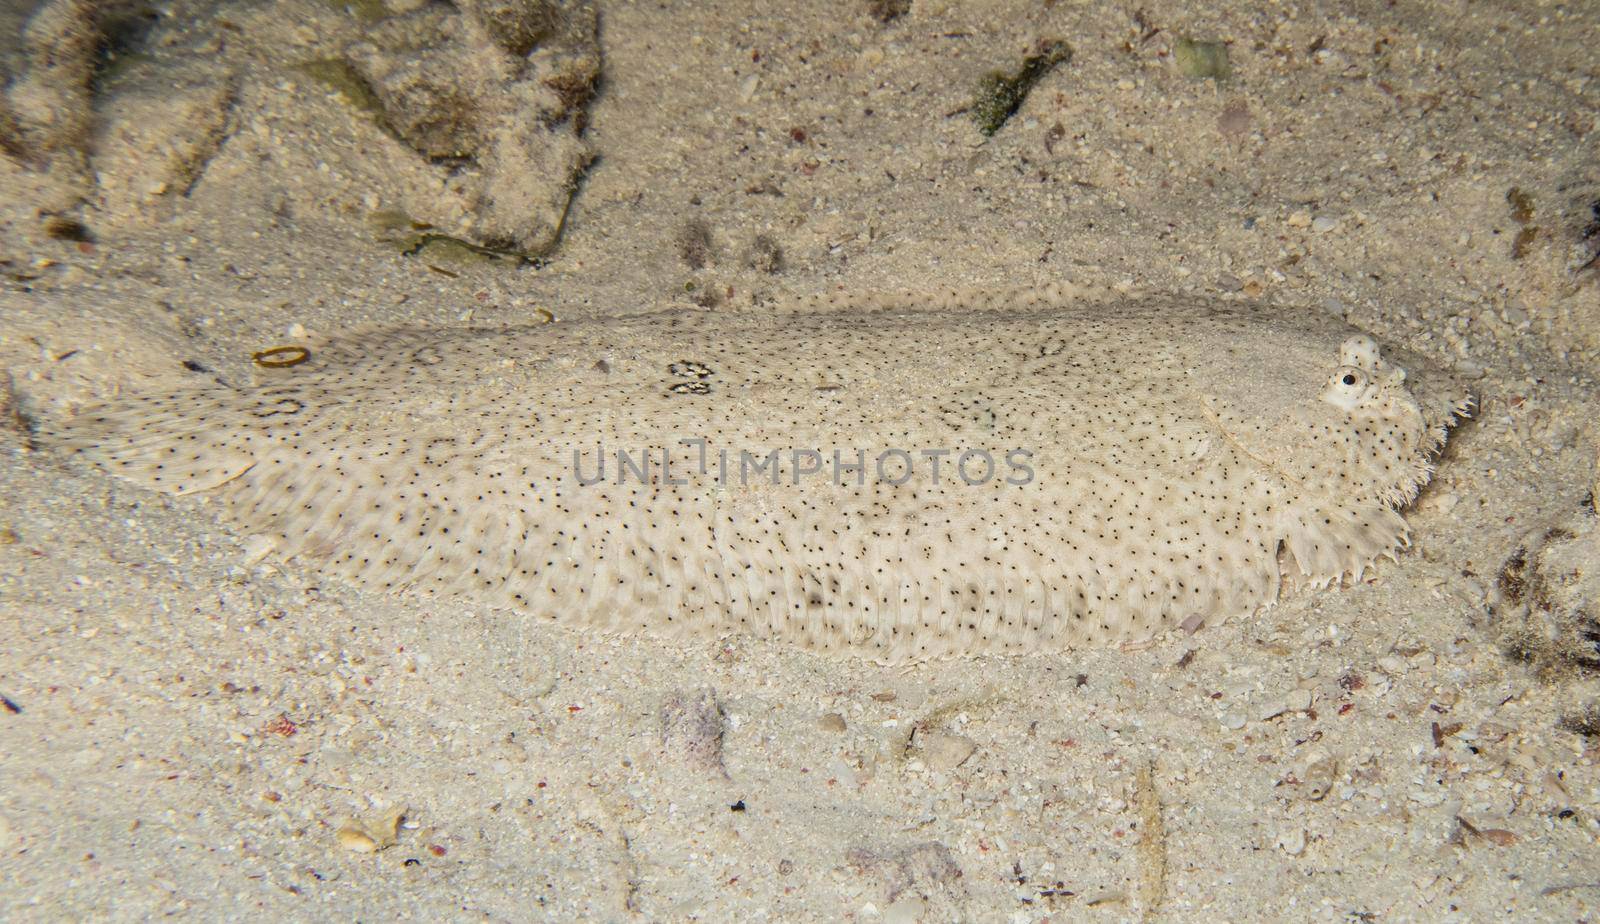 Closeup of moses sole pardachirus marmoratus flatfish camouflaged while swimming on sandy seabed bottom